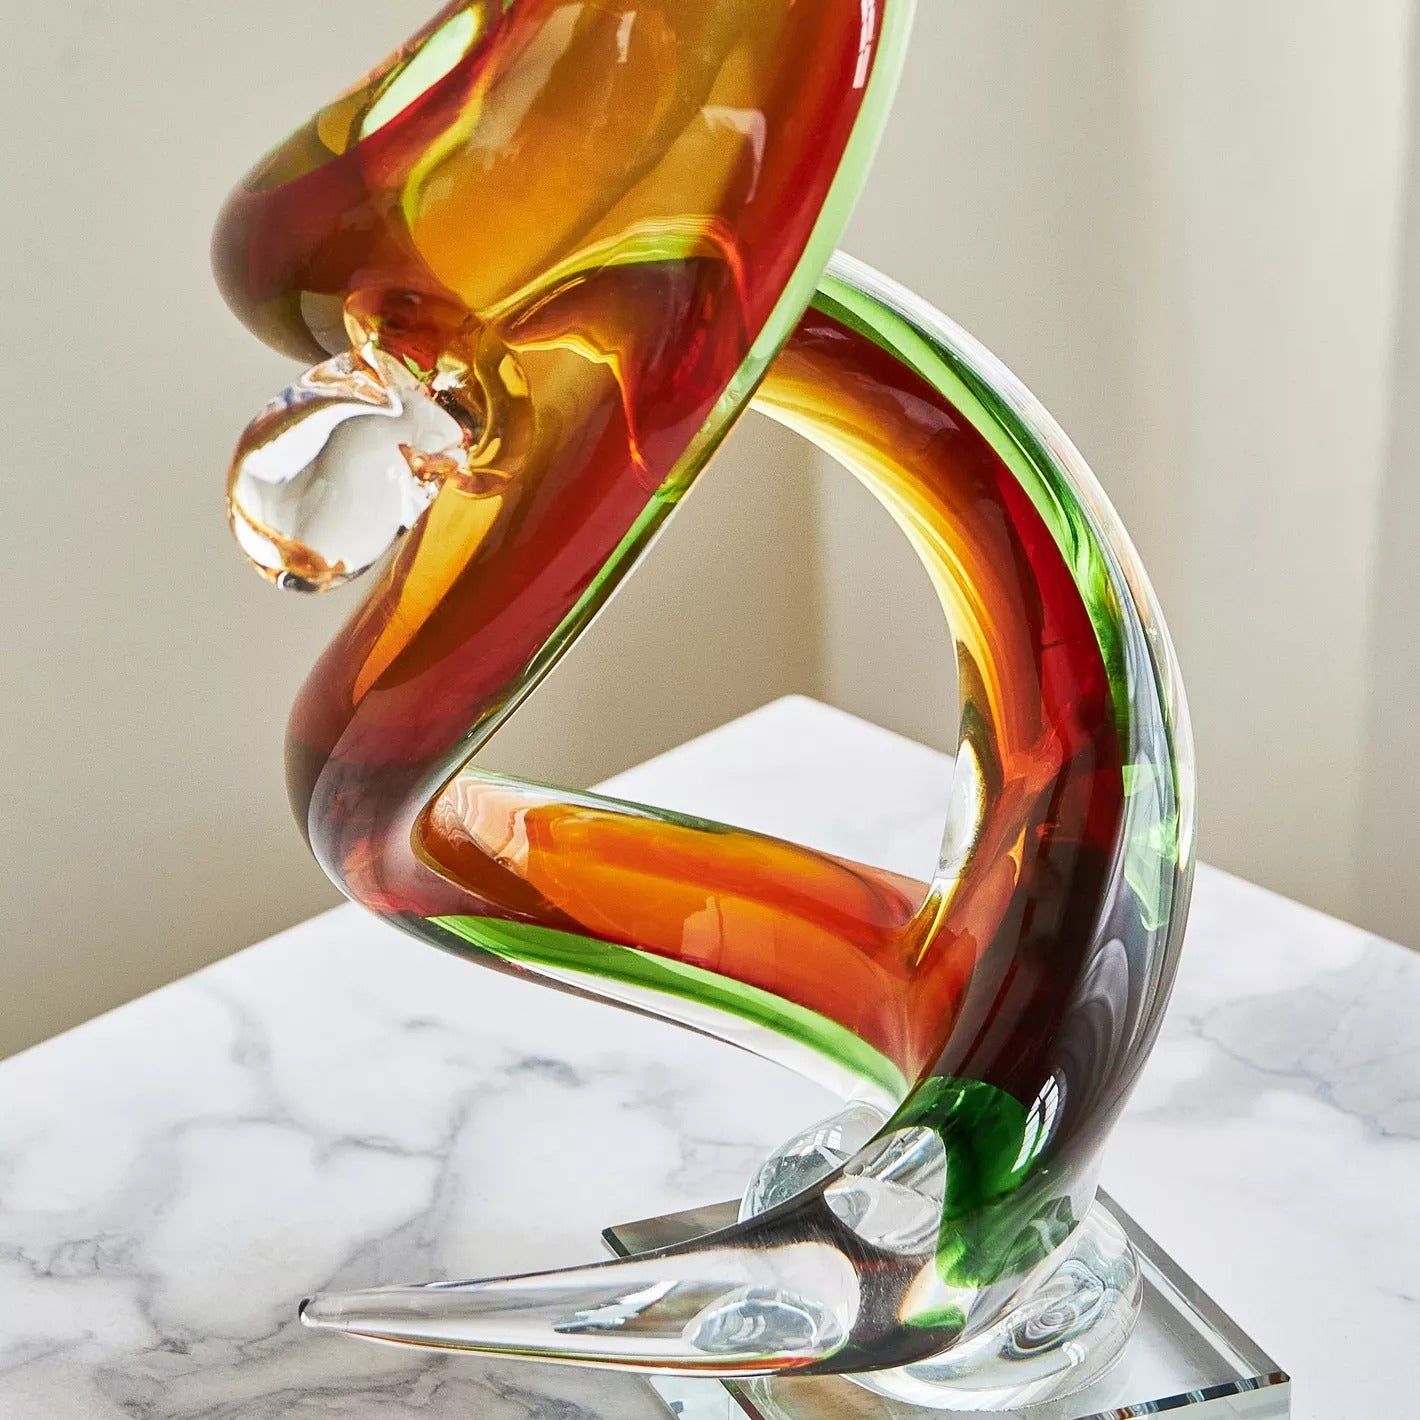 Marie Abstract Ballerine Glass Decorative Sculpture